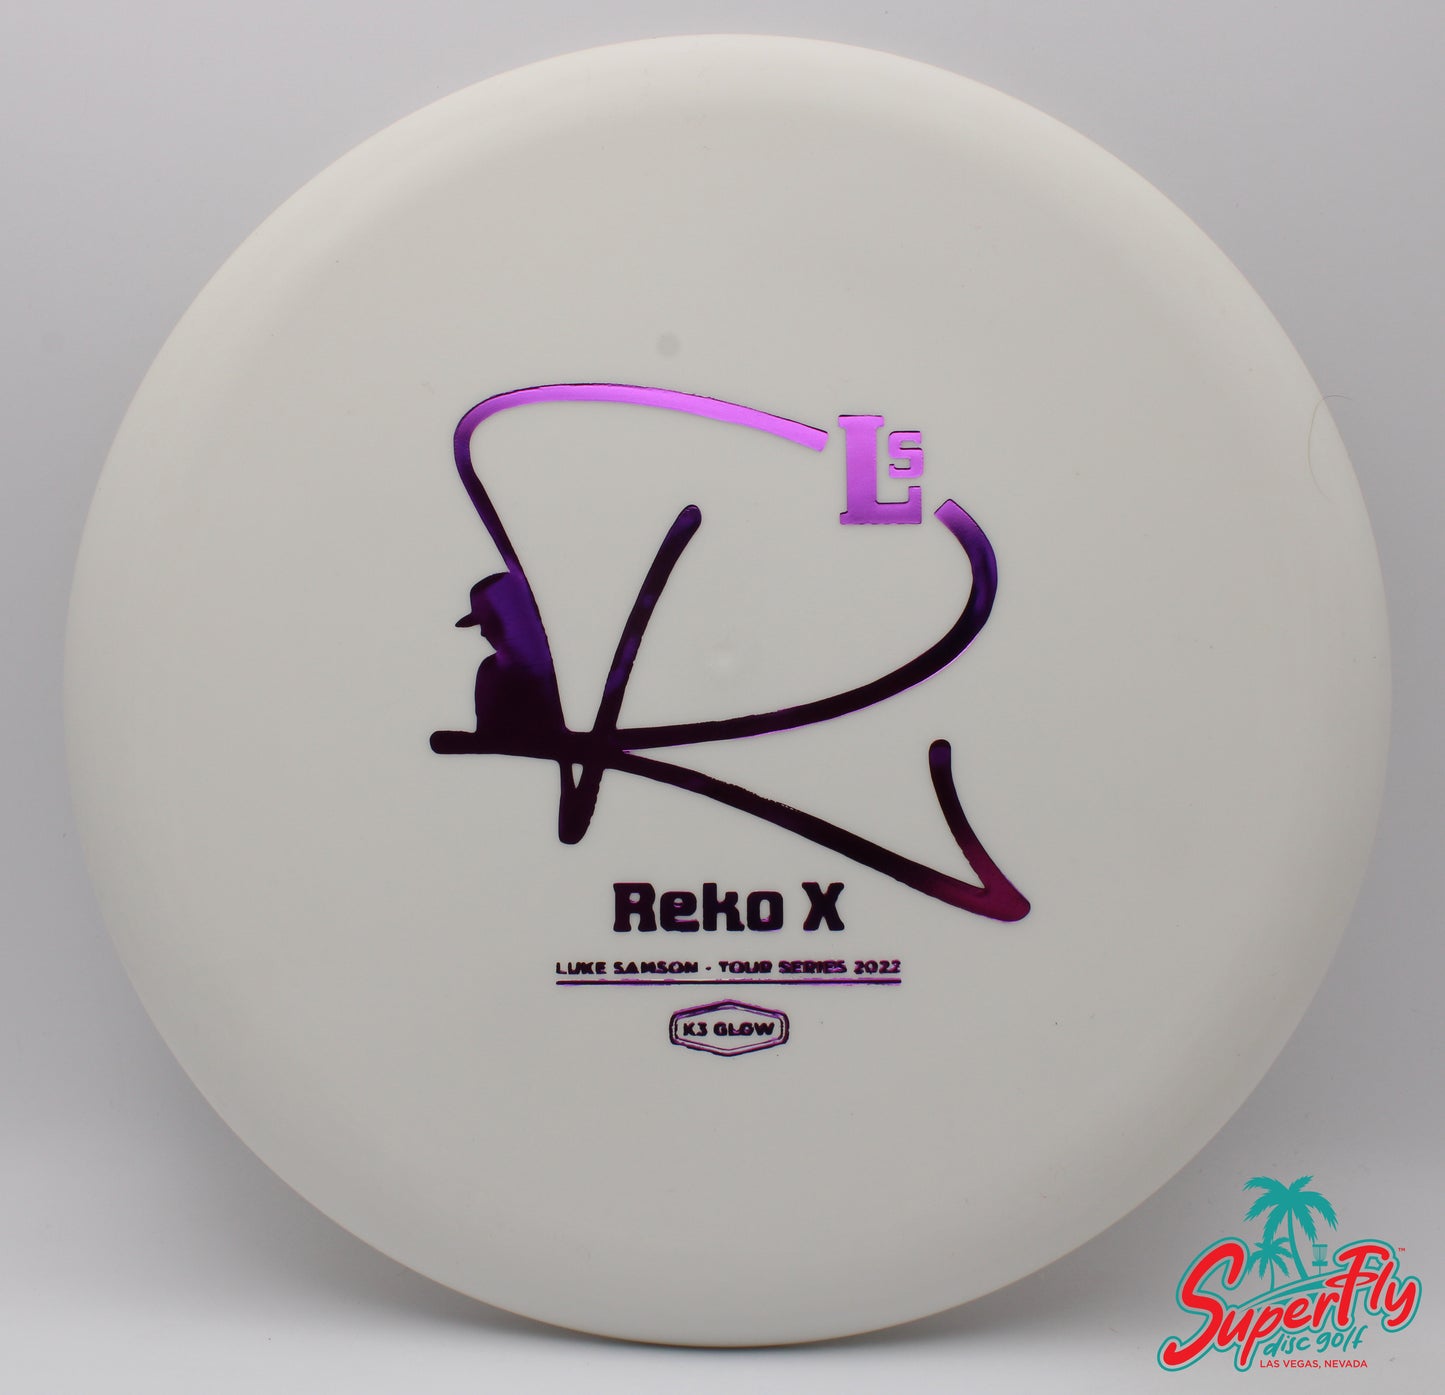 Kastaplast 2022 Luke Samson Tour Series K3 Glow Reko X